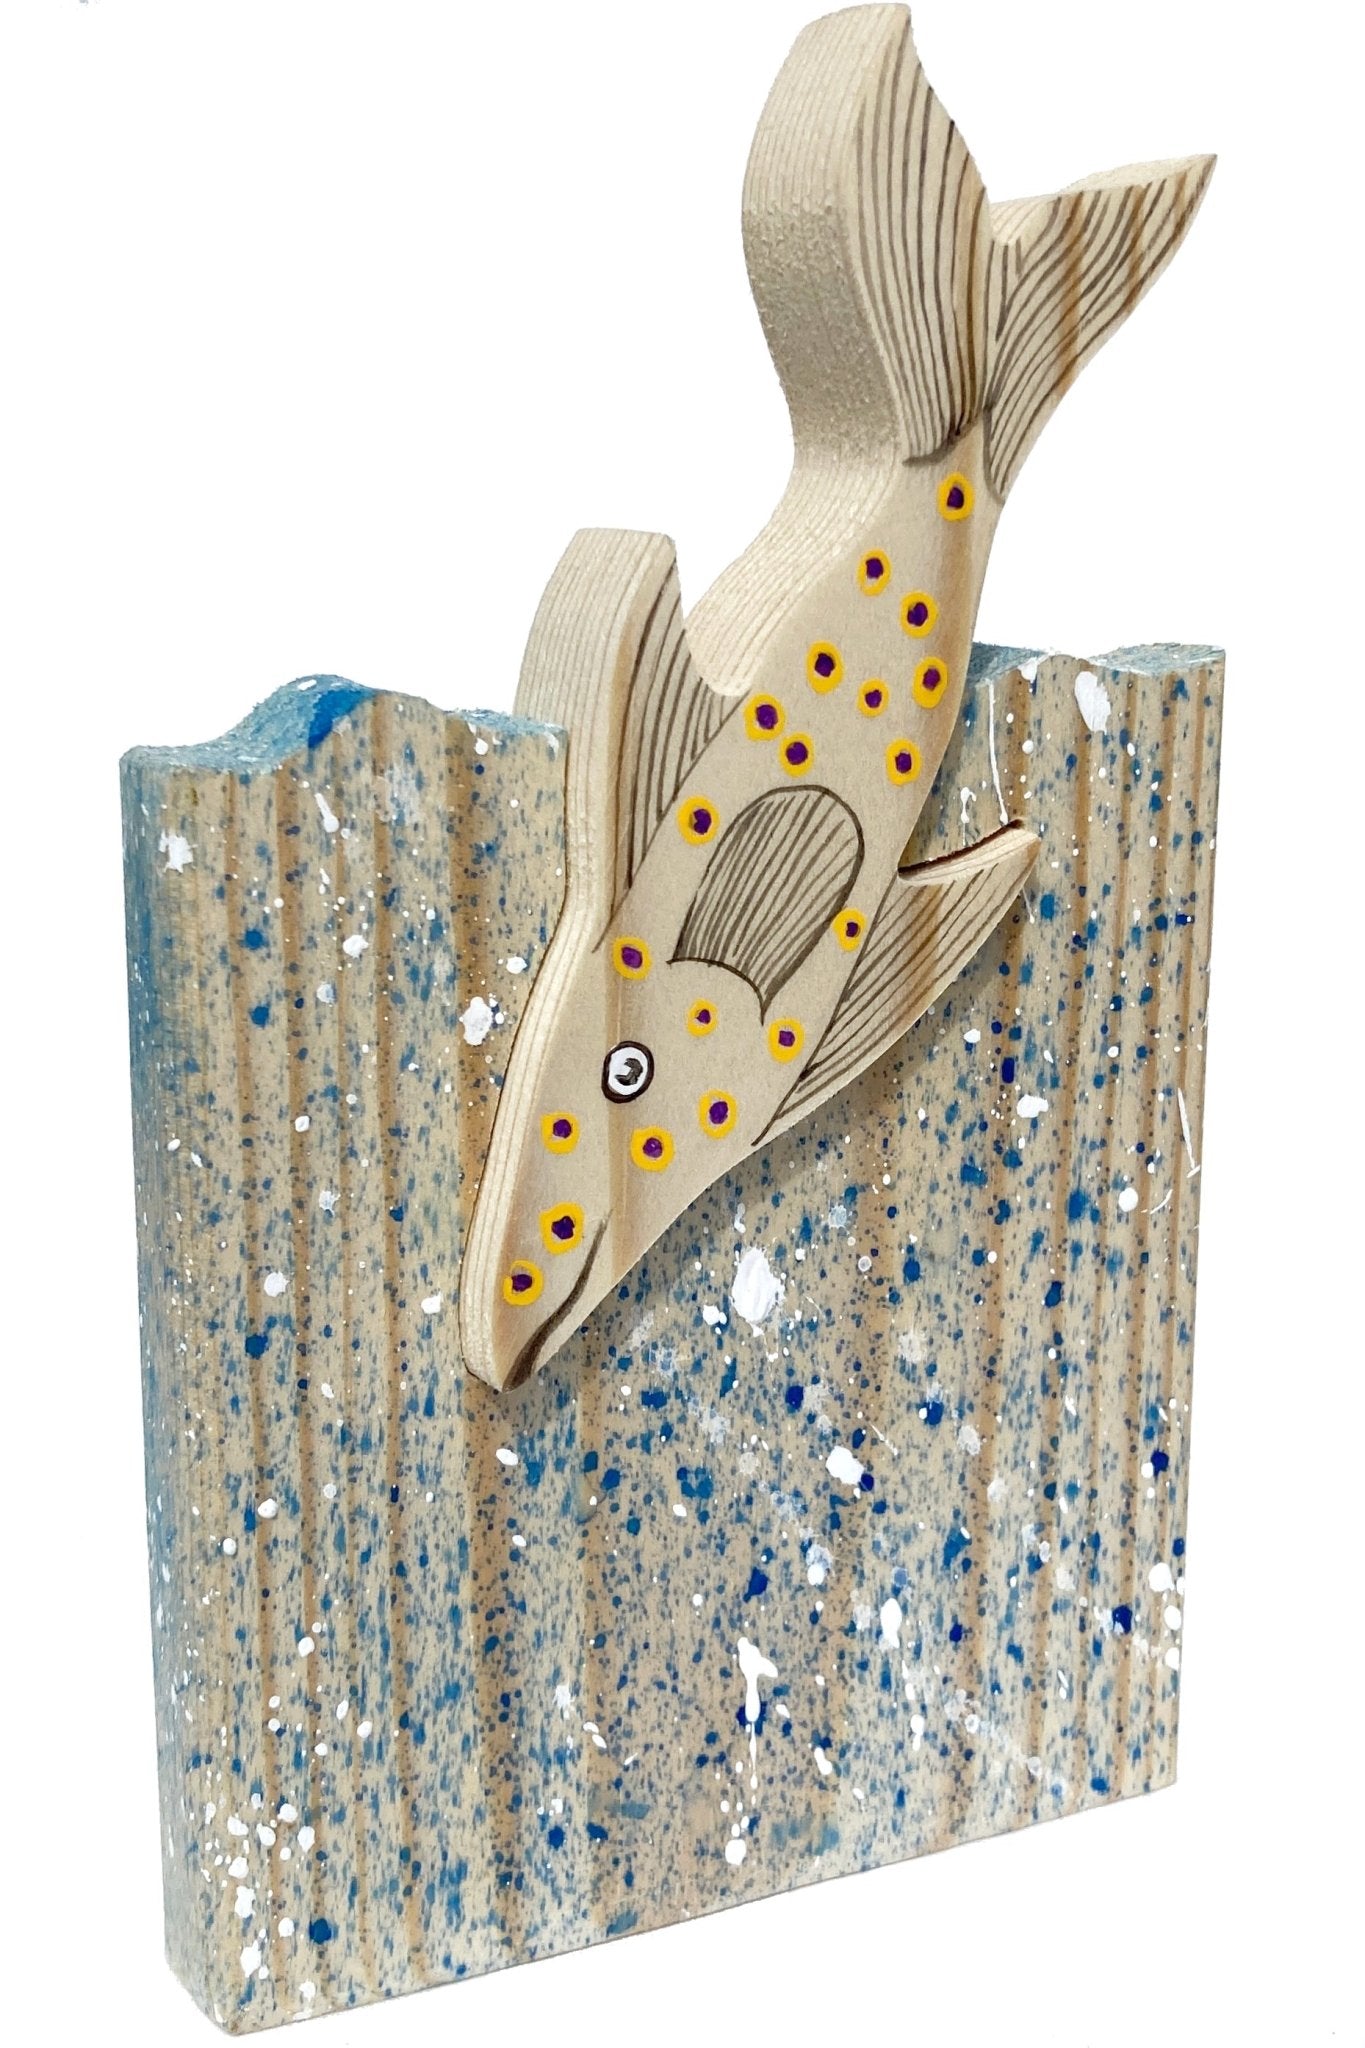 Fish on Wave Wooden Ornament - Interlocking Jigsaw Sculpture - East Neuk Beach Crafts